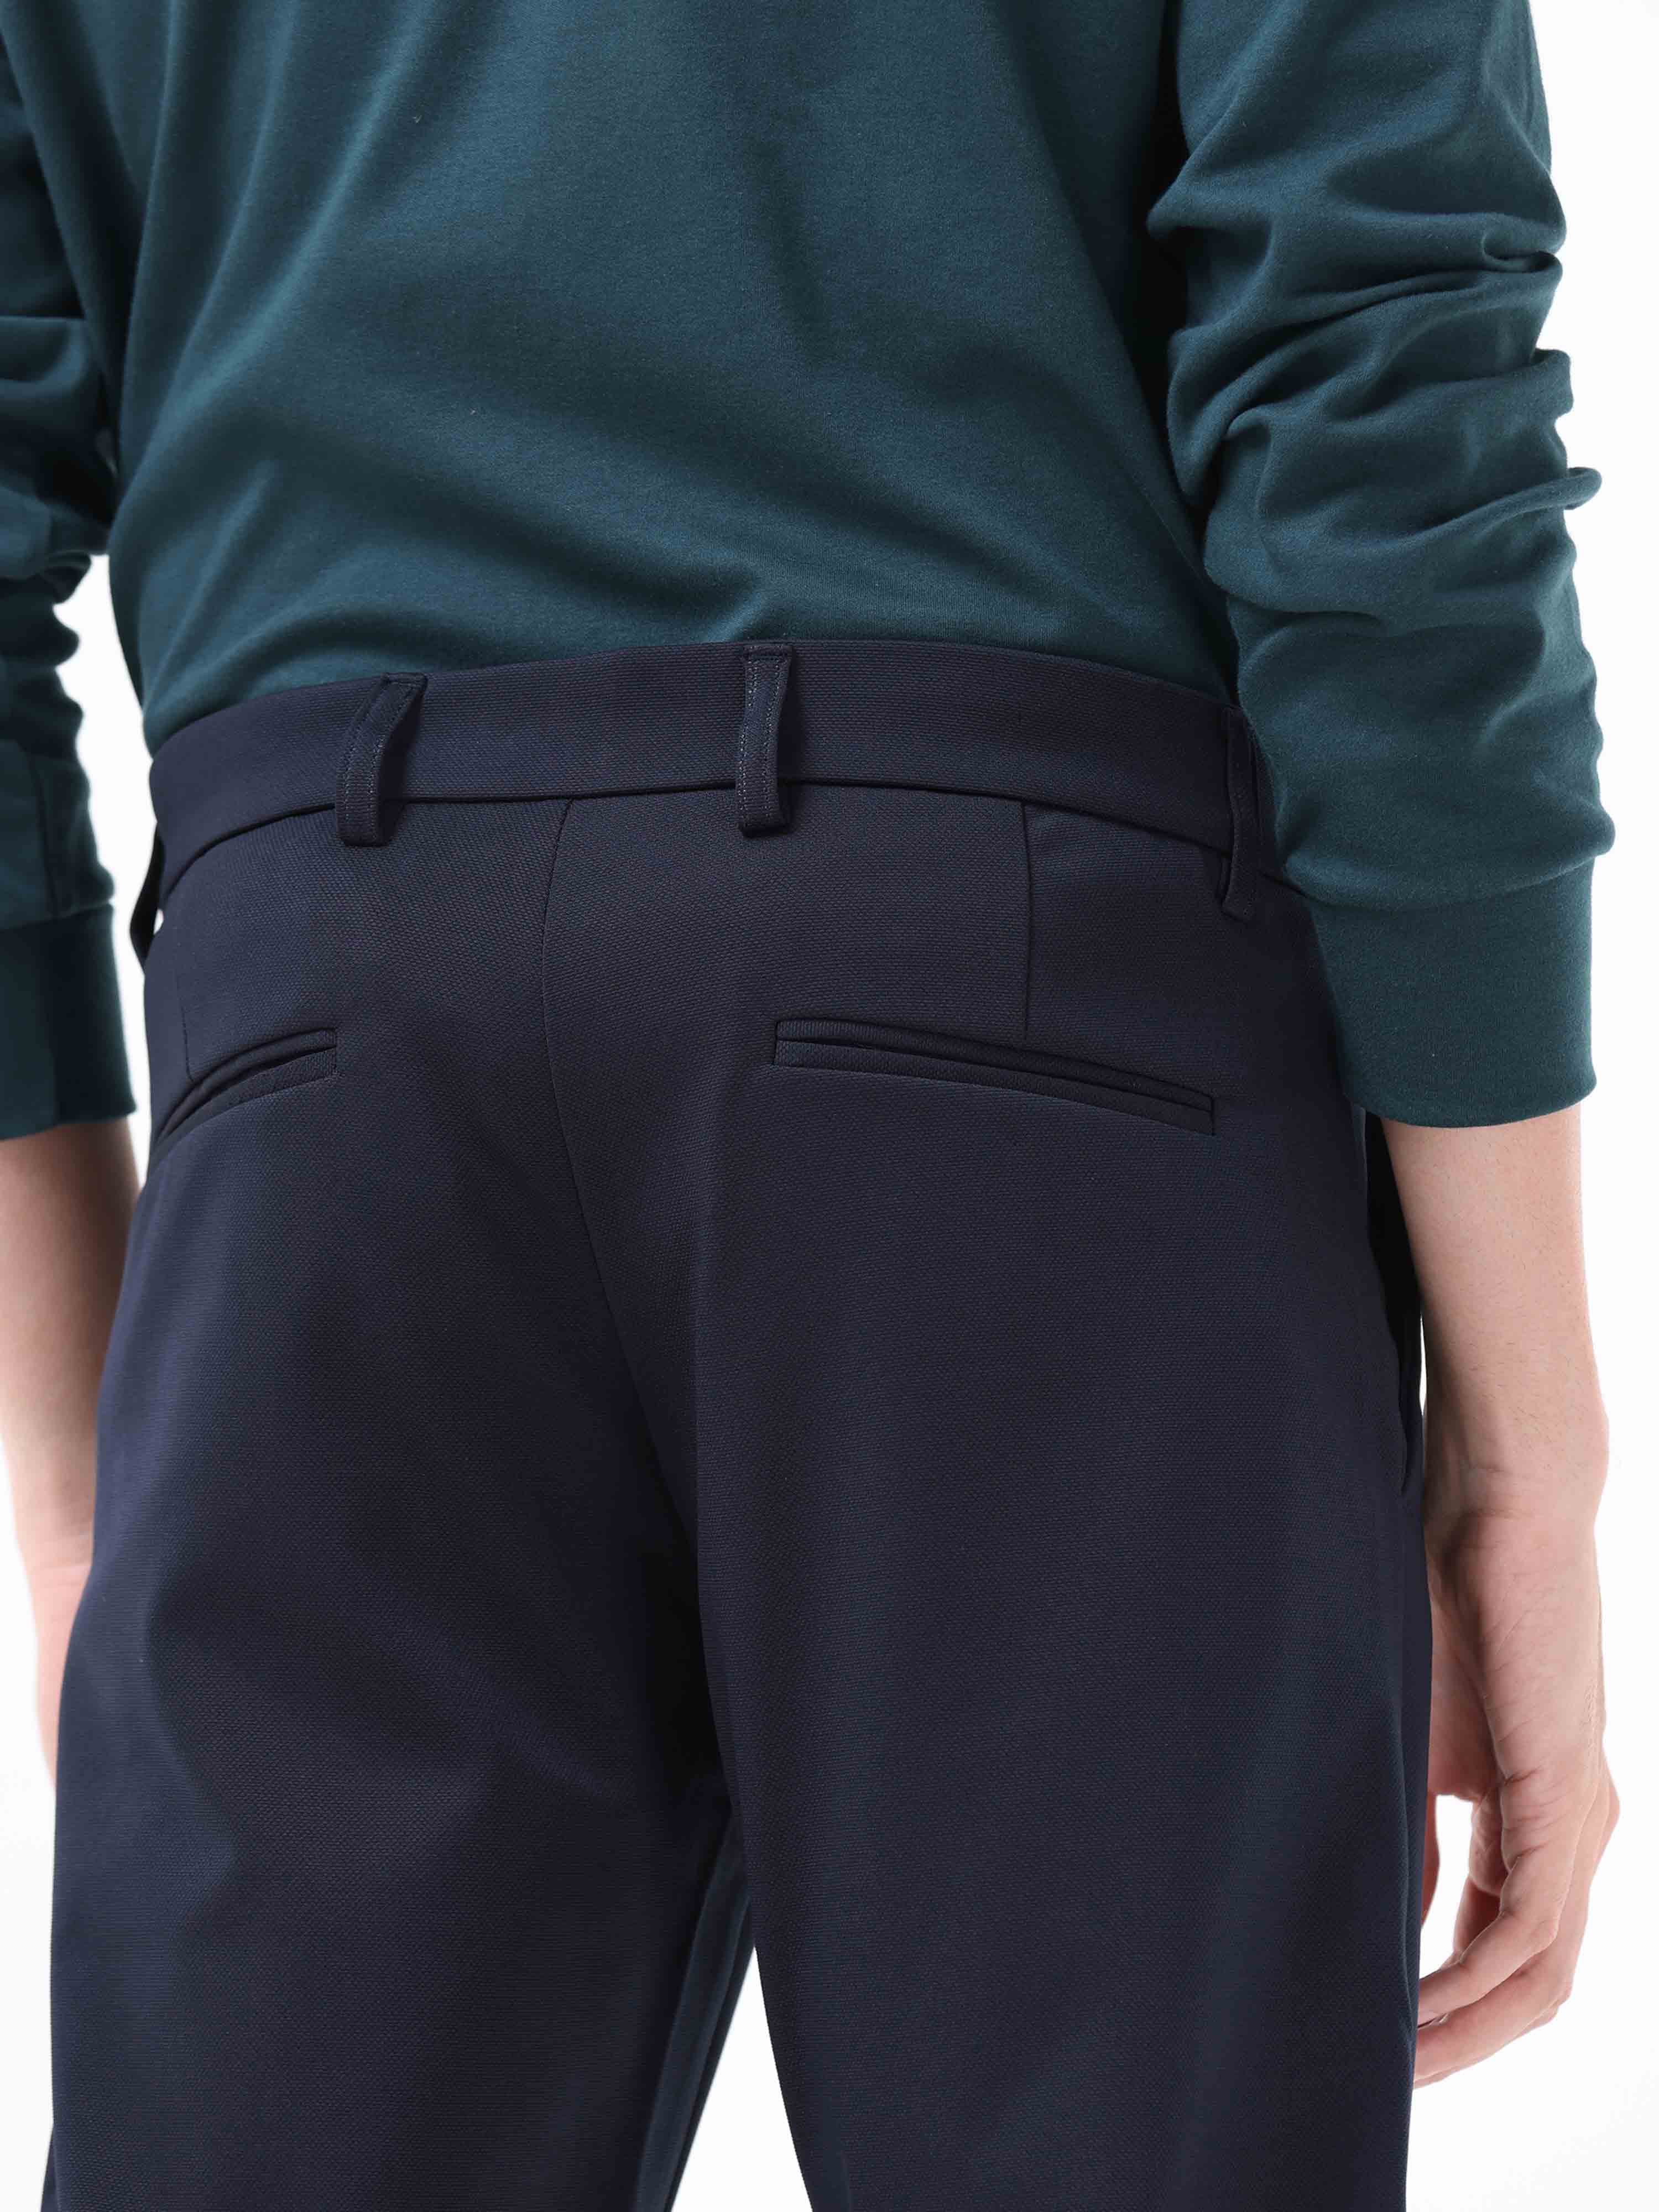 ZEGNA Men's Formal Wool/Mohair Dress Pants - Bergdorf Goodman